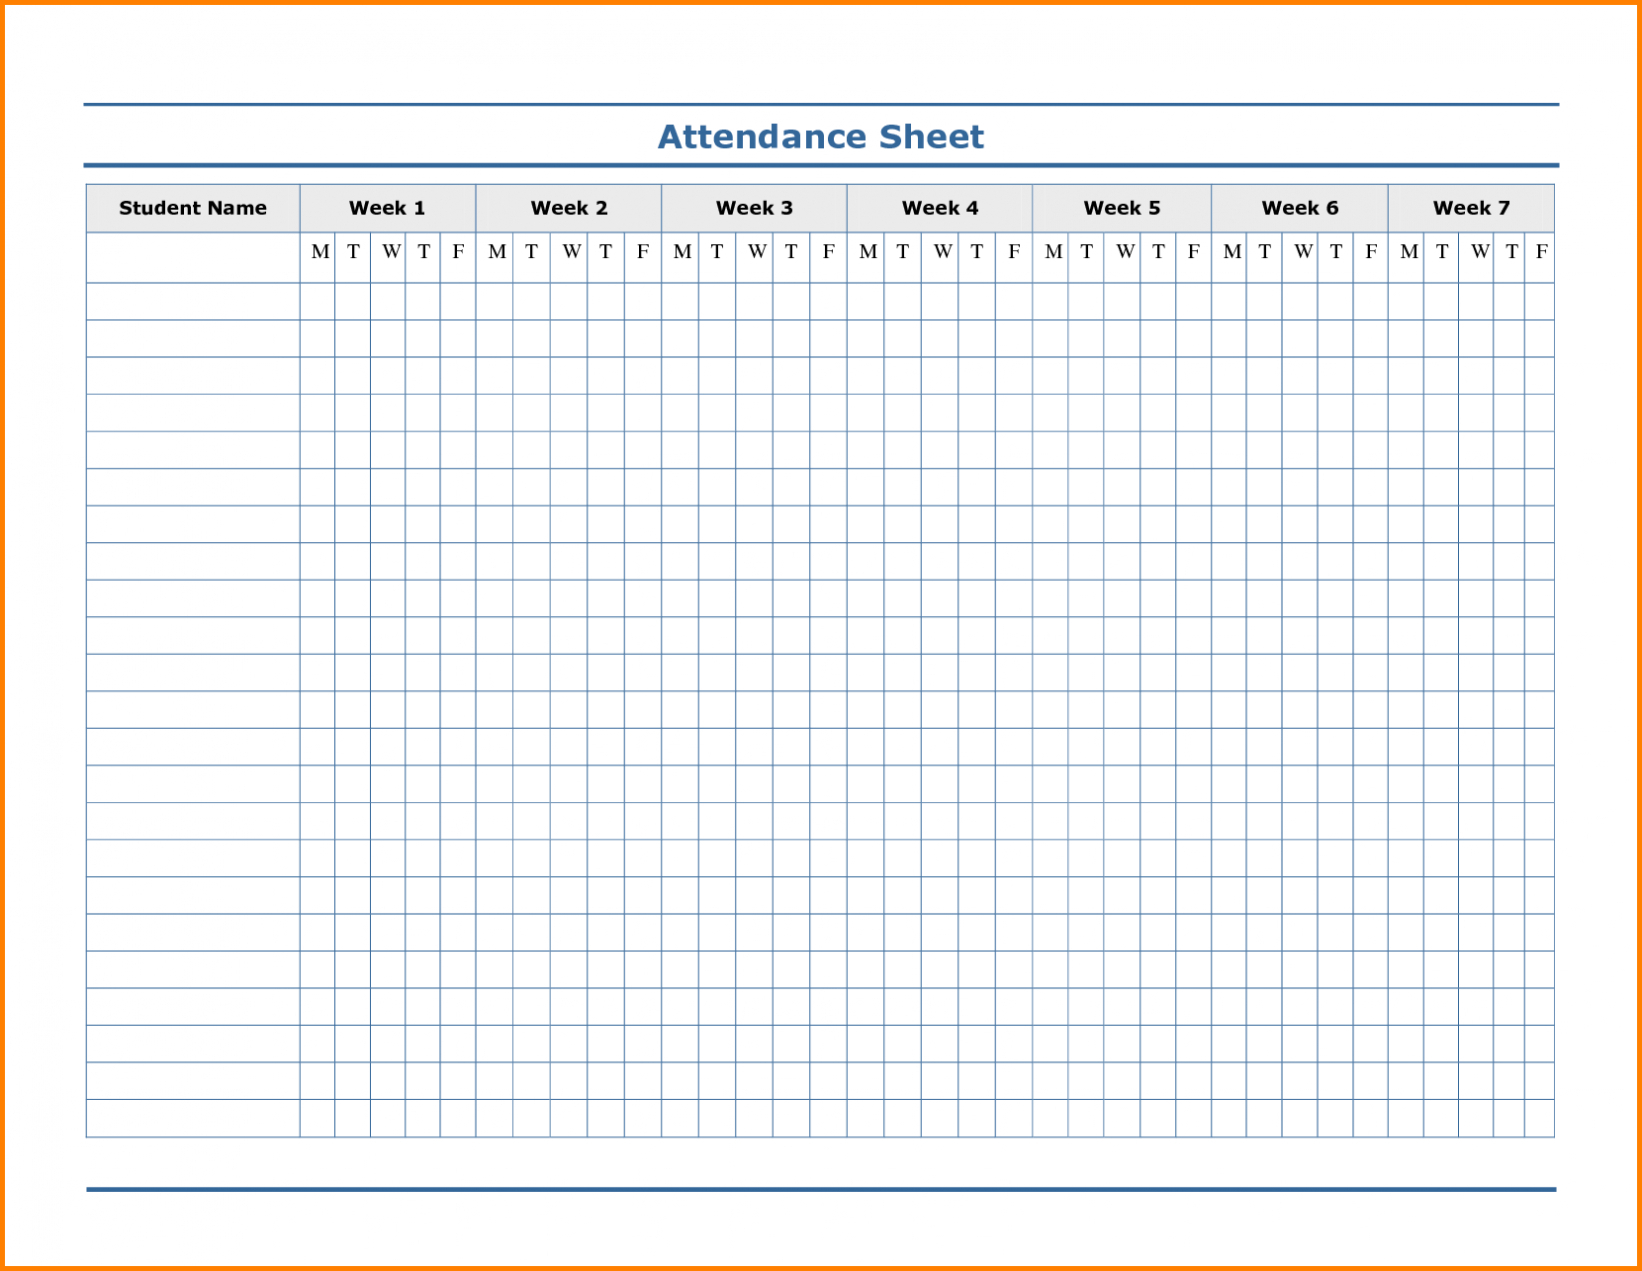 Free Employee Attendance Template | Example Calendar Printable